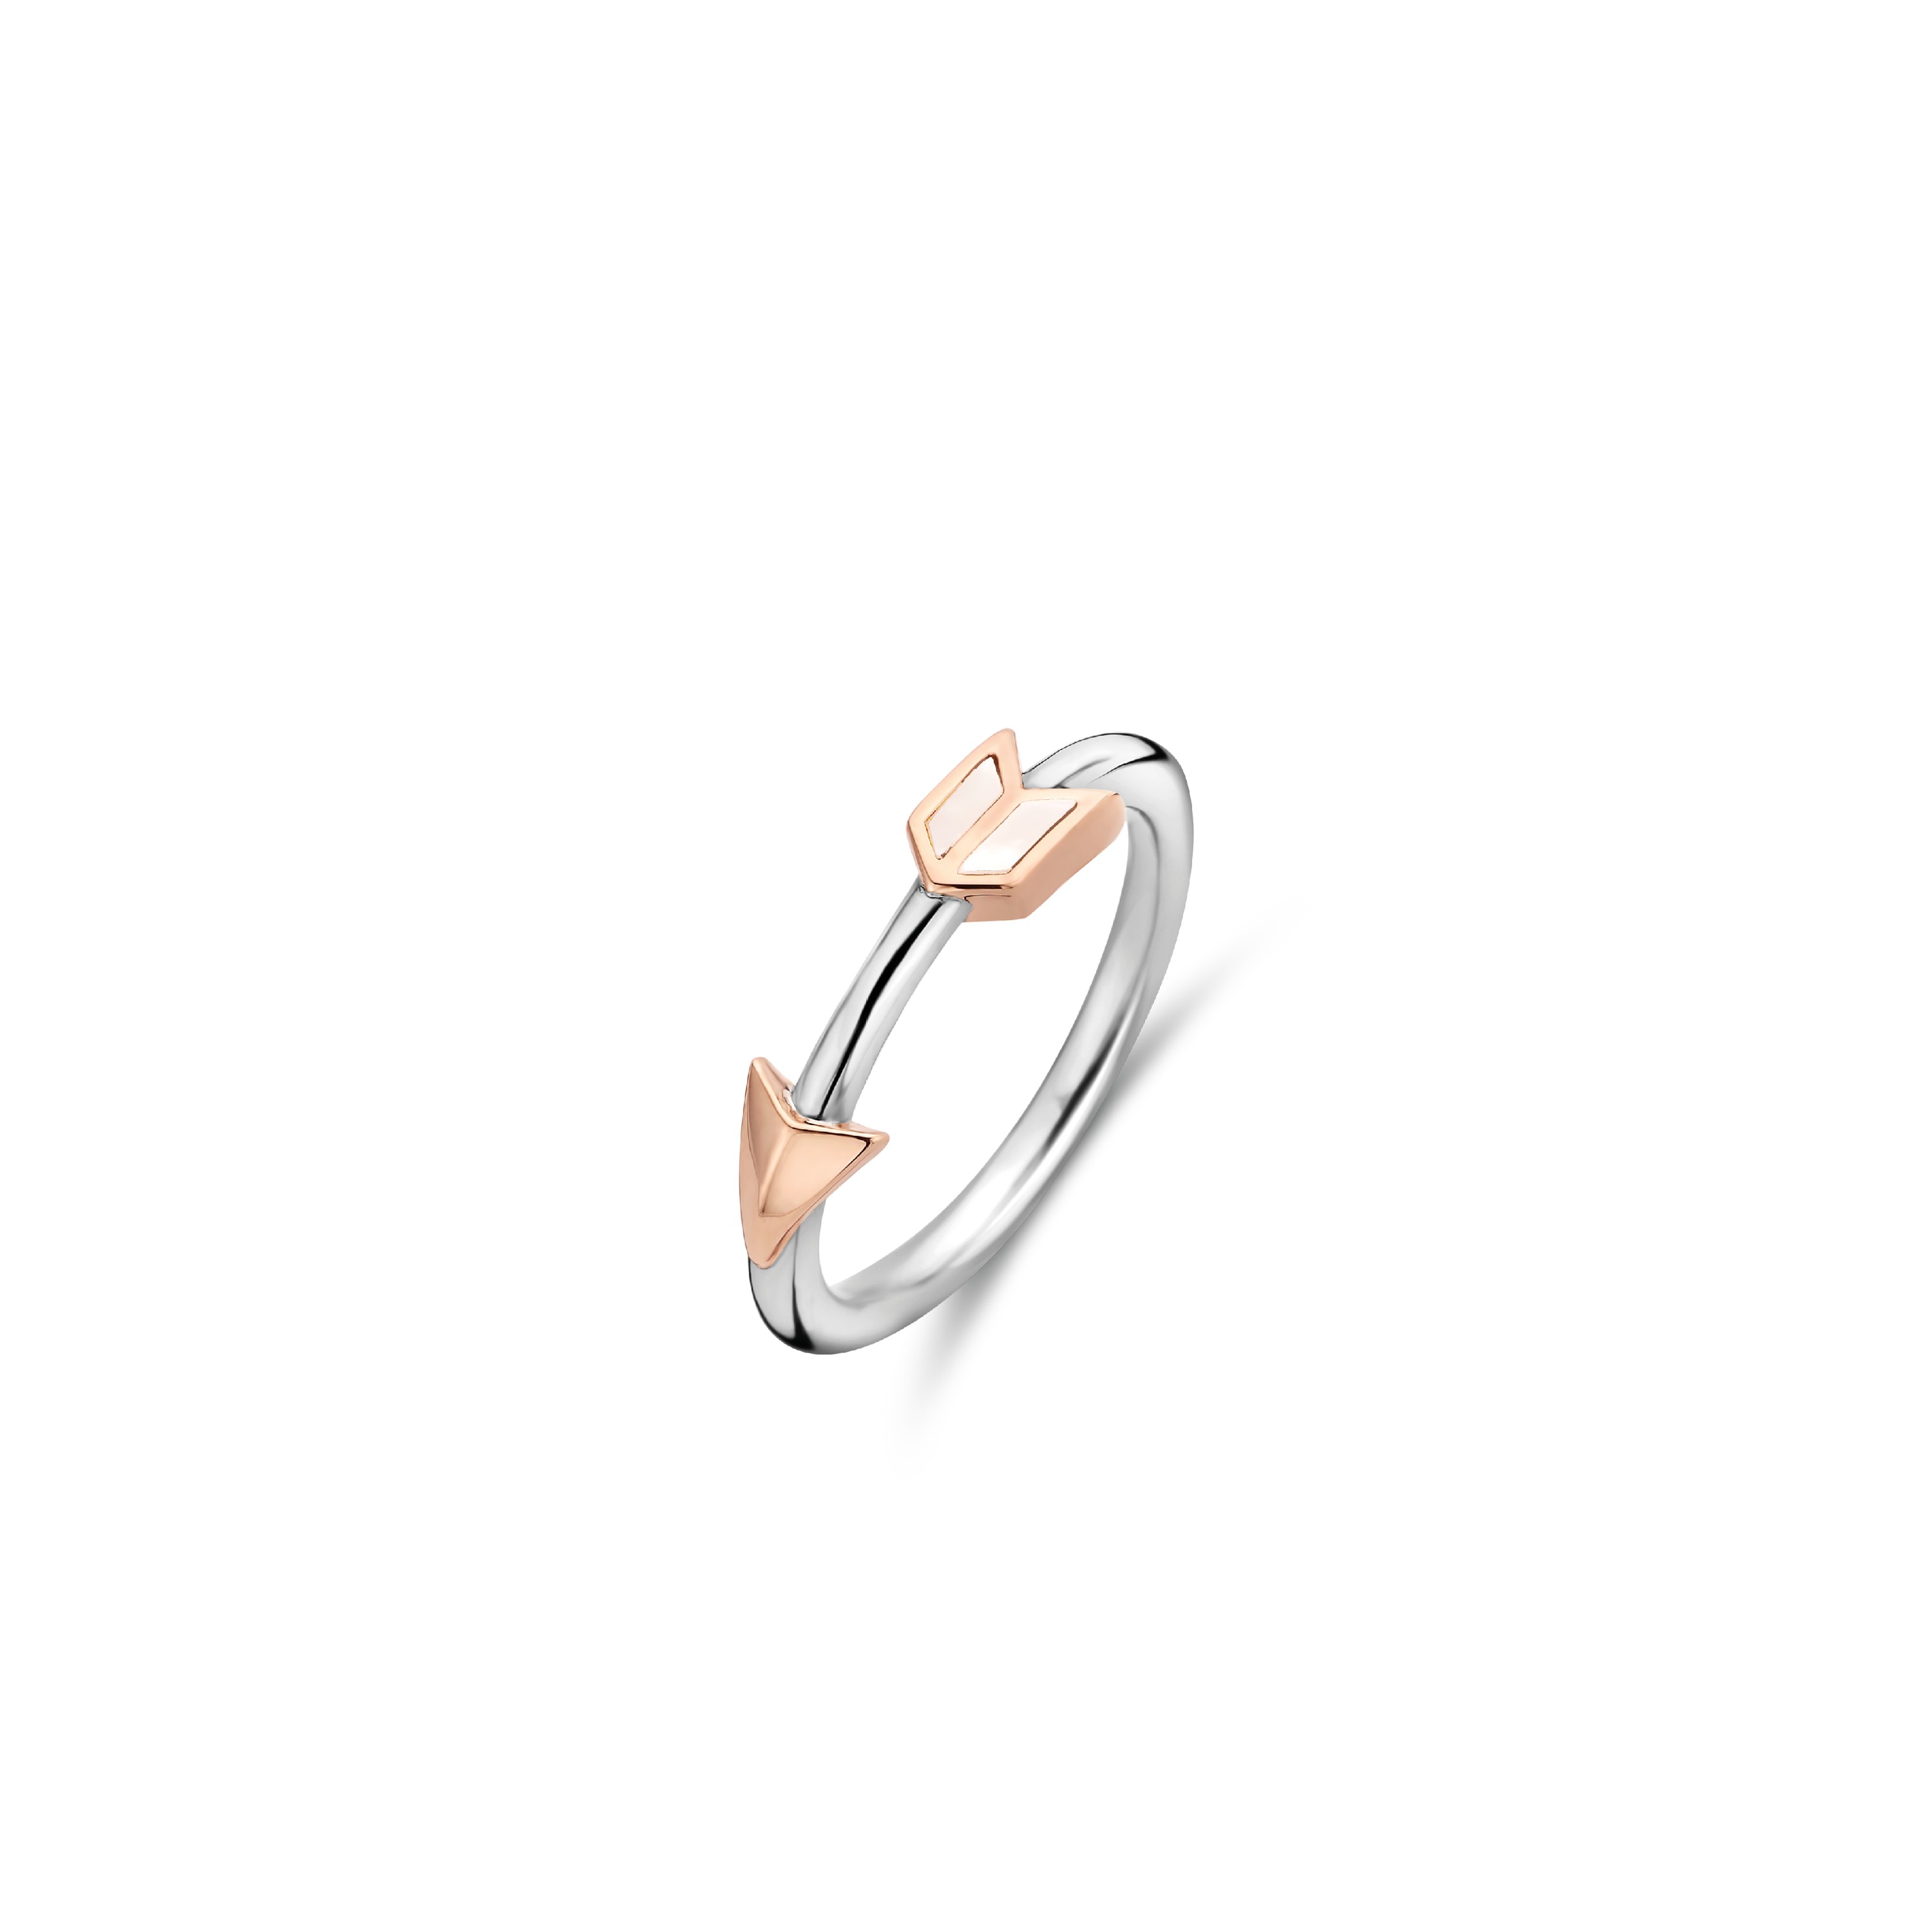 TI SENTO - Milano Ring 12198MW Gala Jewelers Inc. White Oak, PA